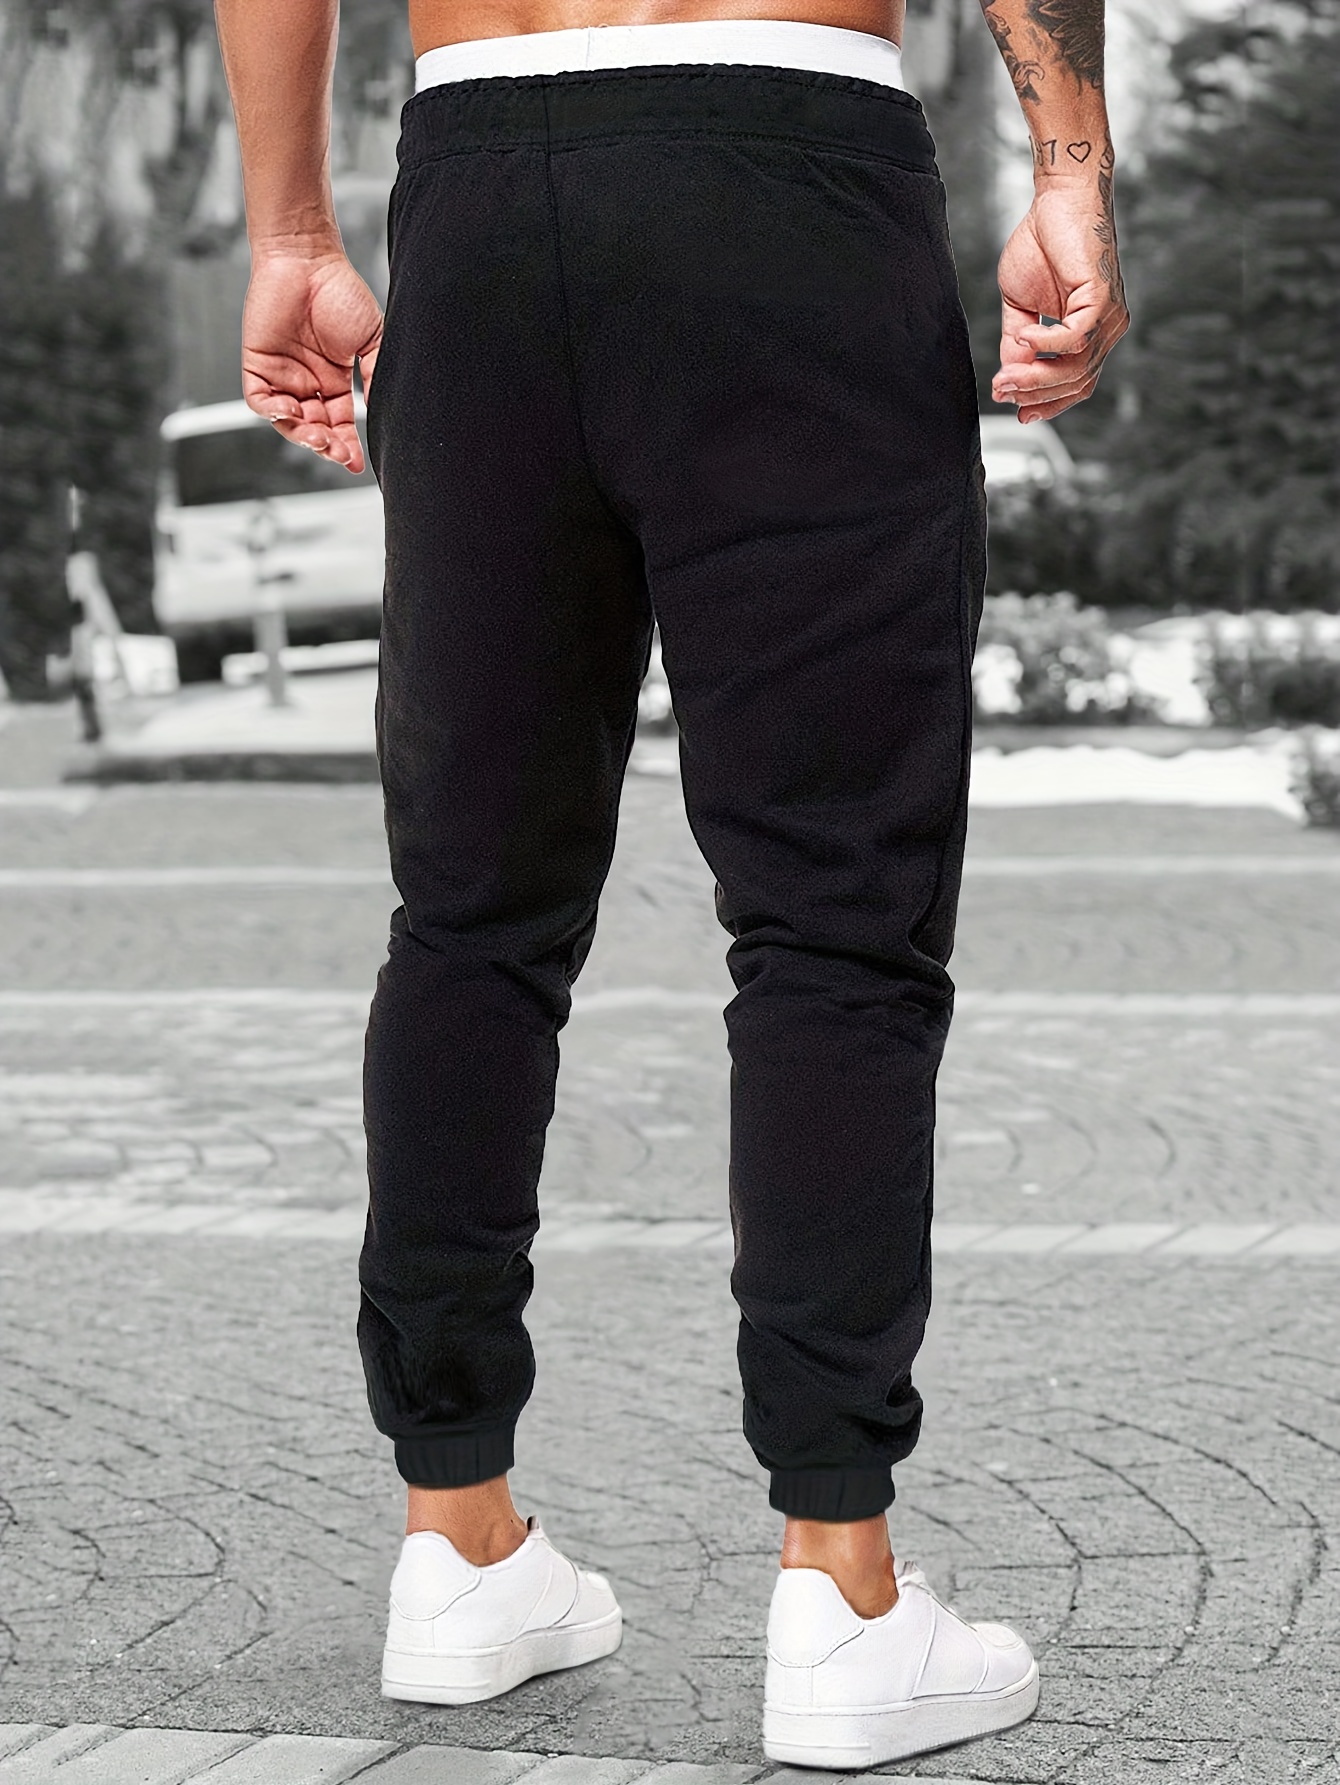 Slim Fit Sweatpants - Black with White